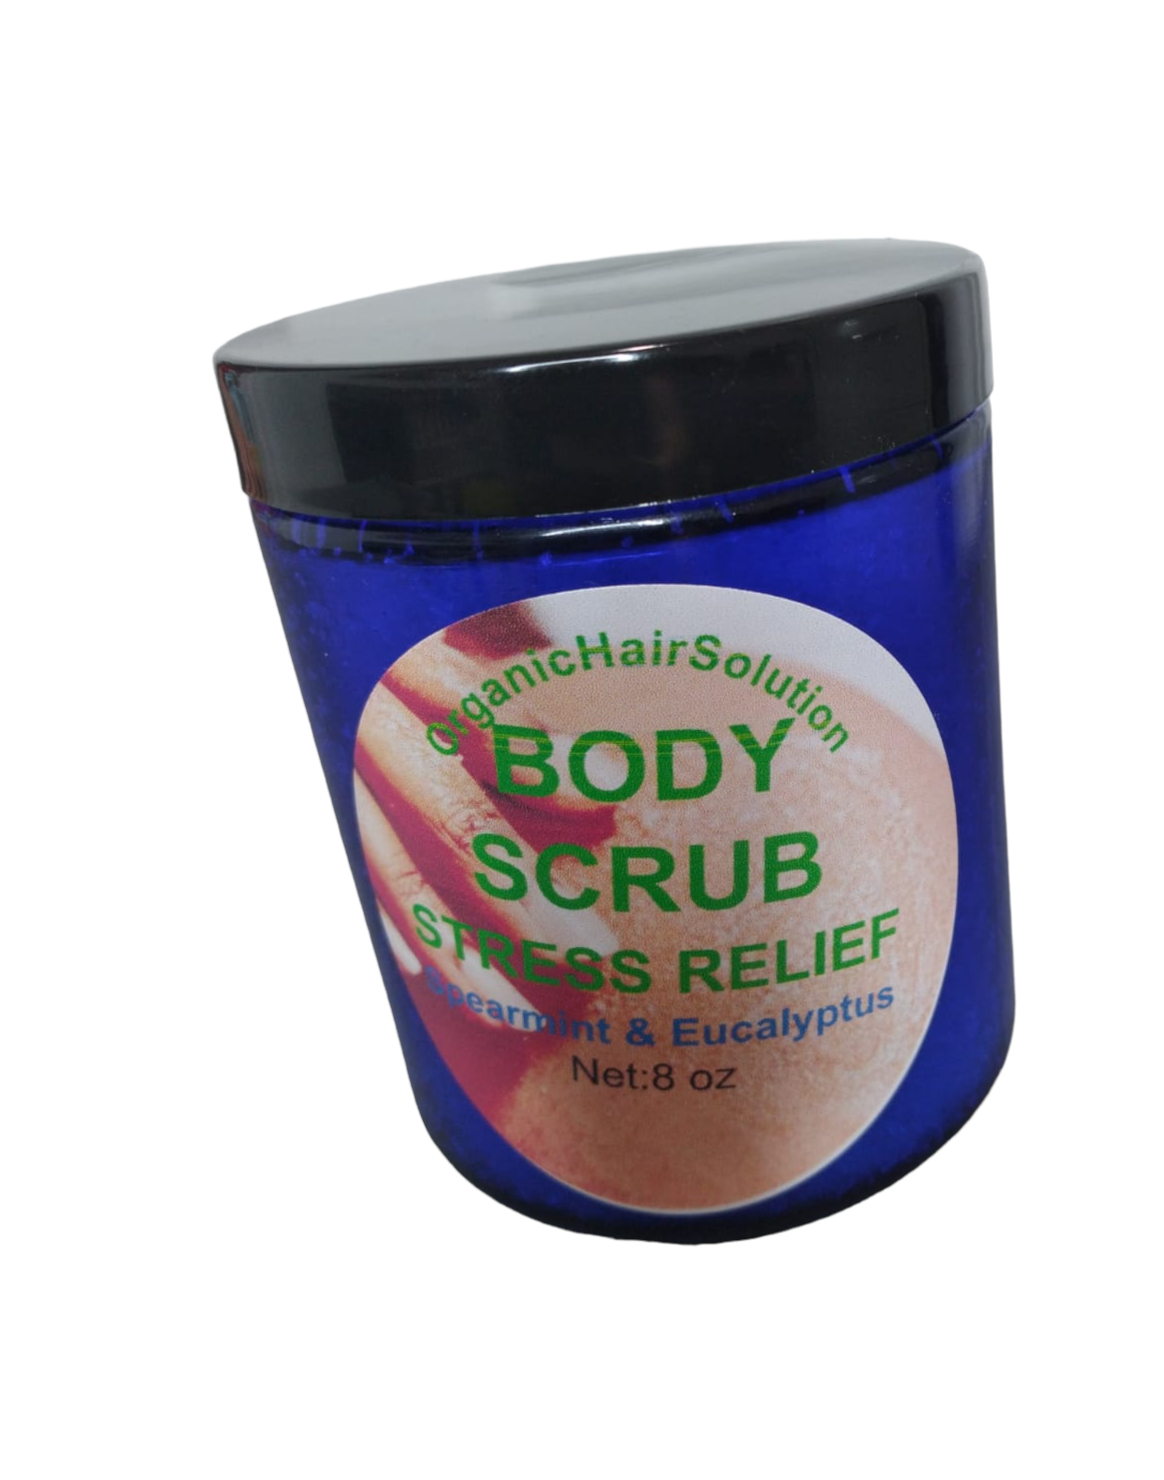 BODY SCRUB-Stress Relief with Eucalyptus & Spearmint - Organic Hair Solution, LLC